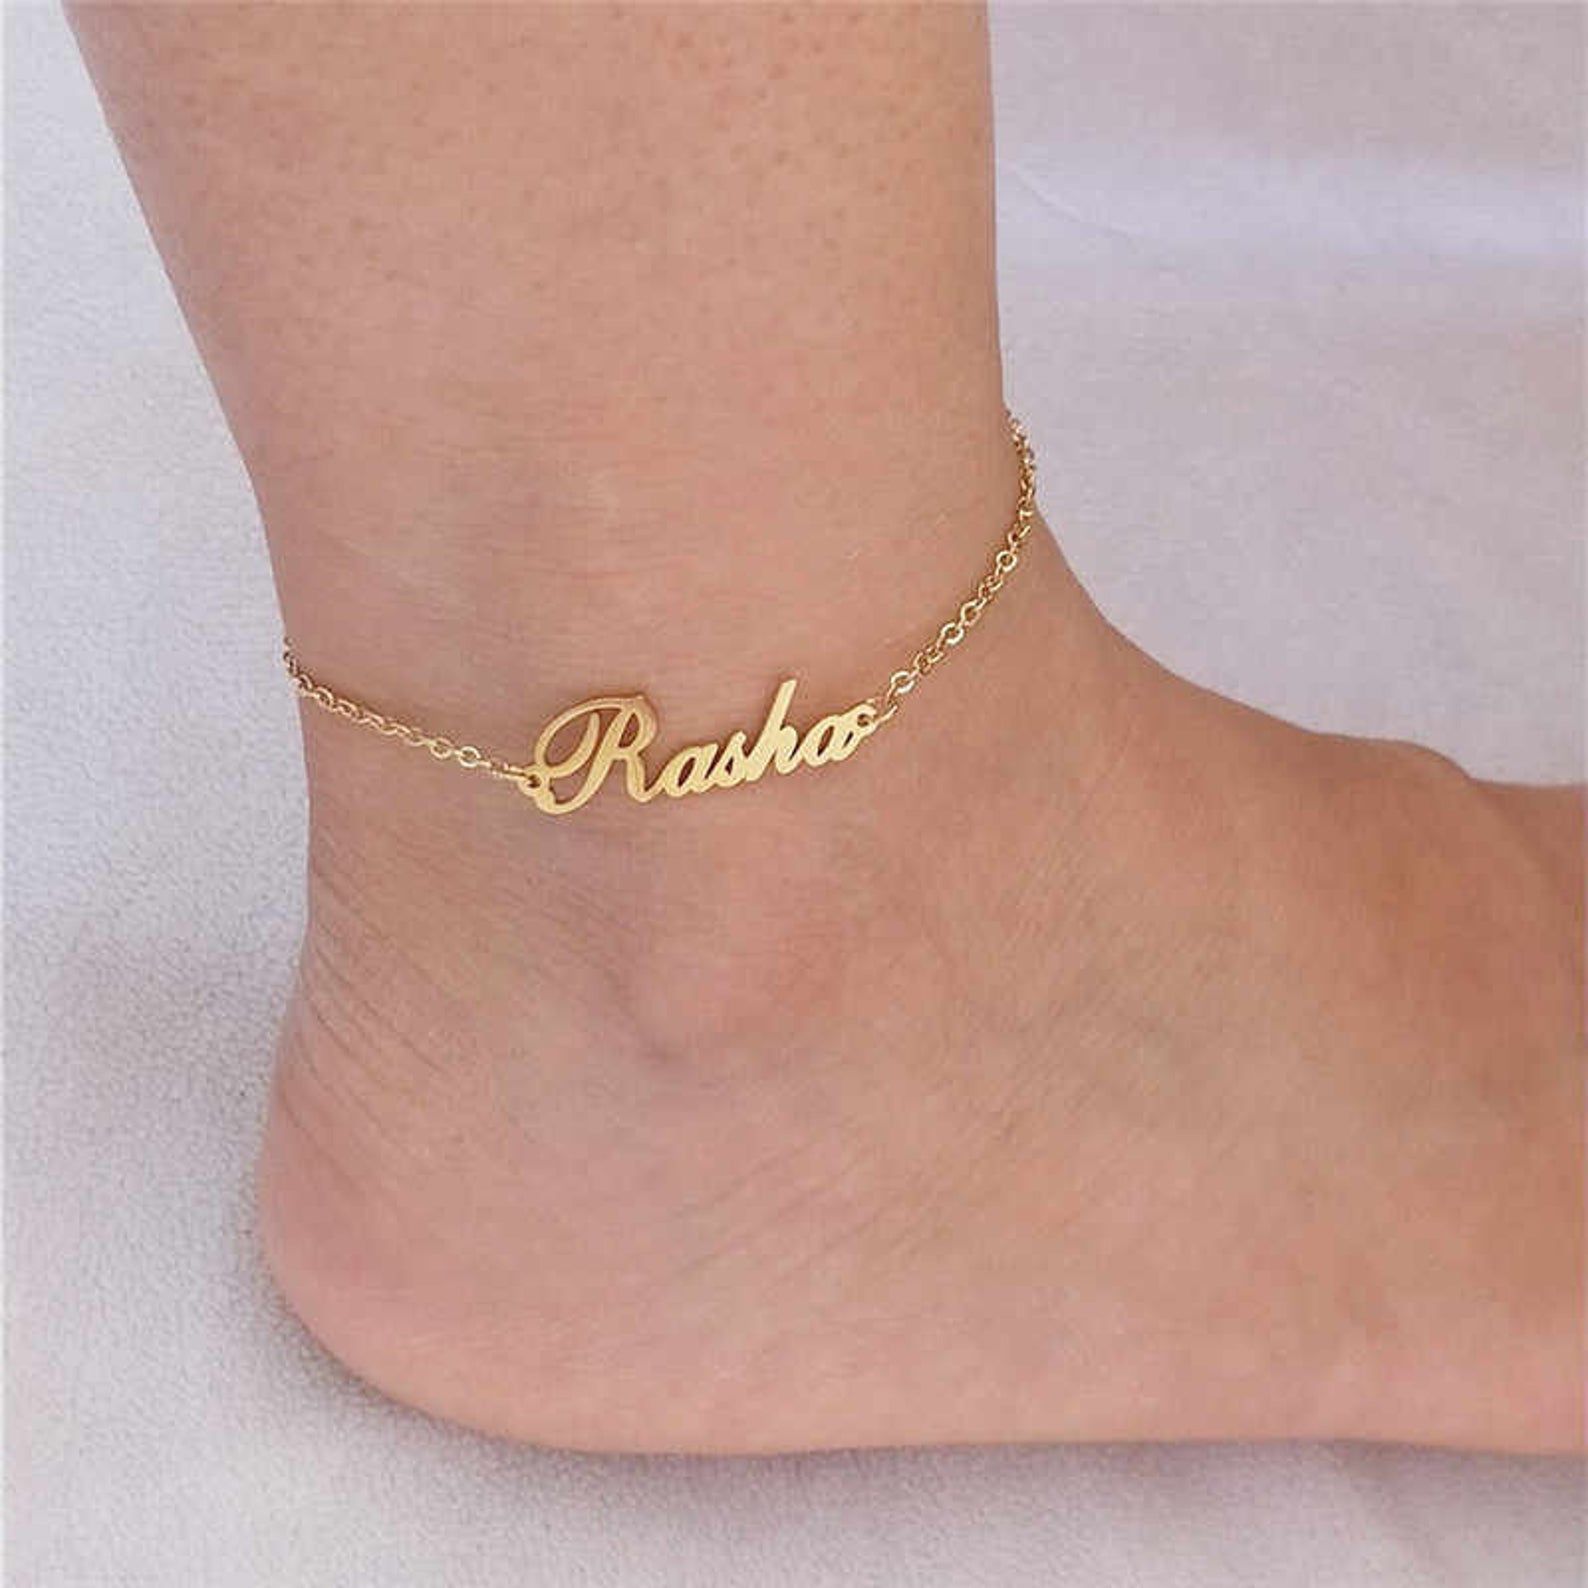 custom name anklets